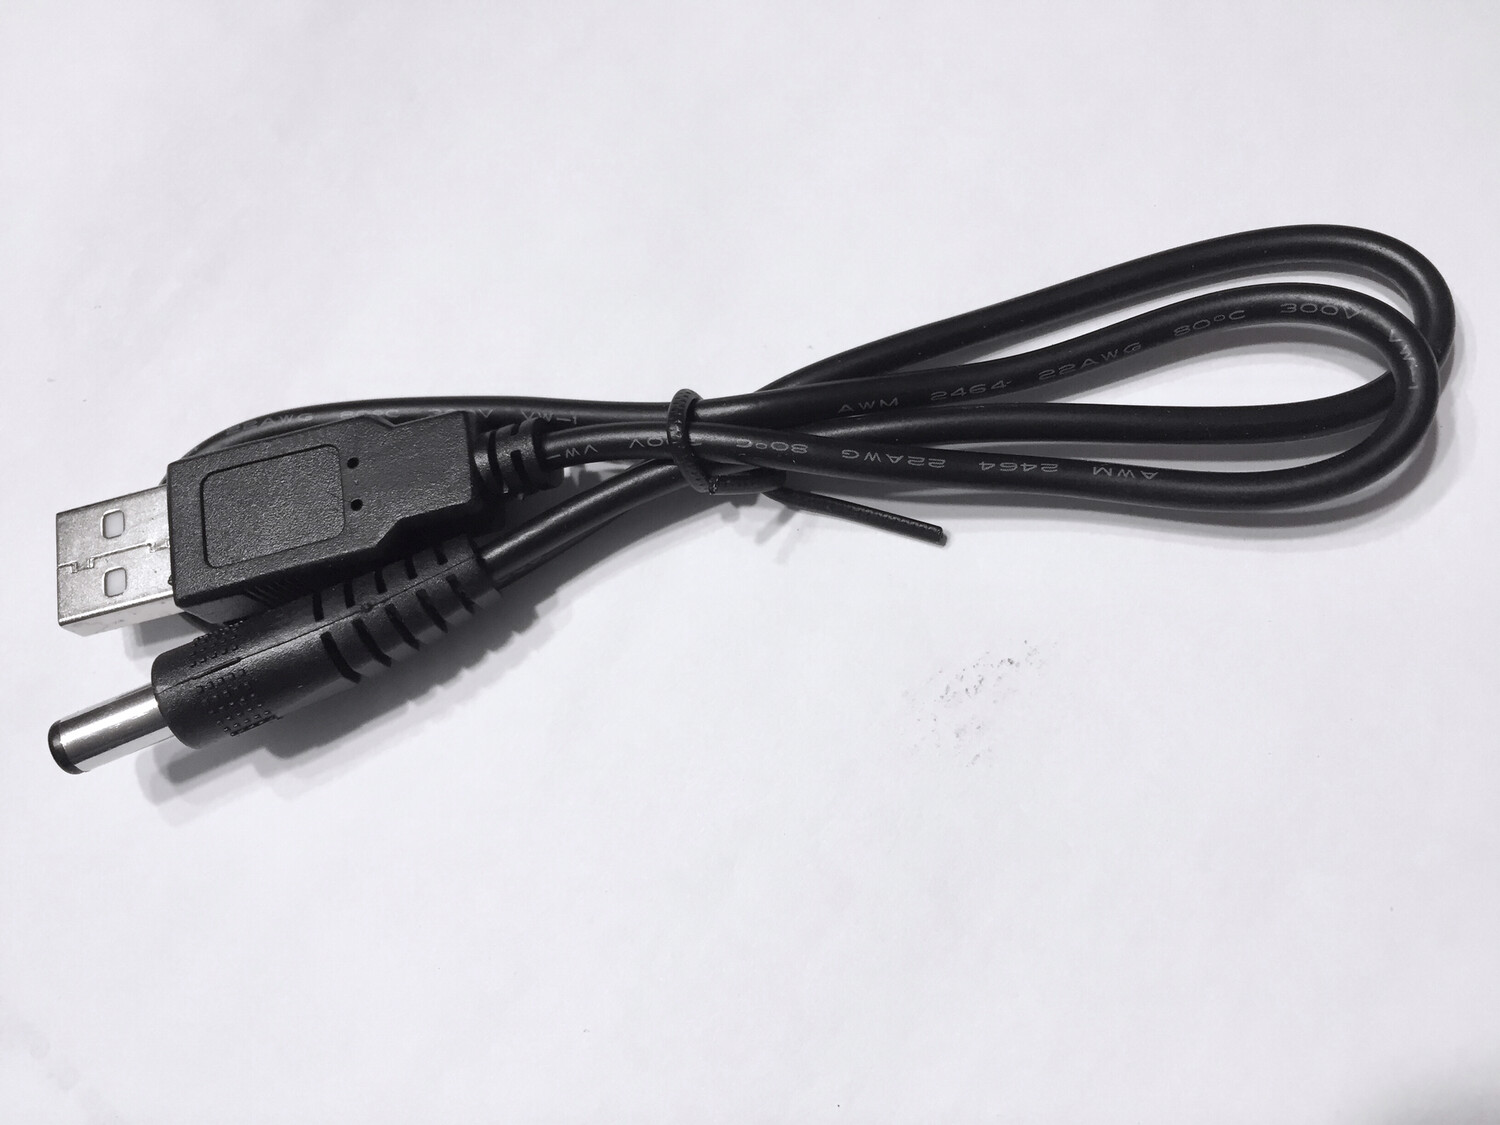 A1UP Countercade power cable (USB to 5v DC) - Make Your Countercade Portable!! (GEN 2 Only)